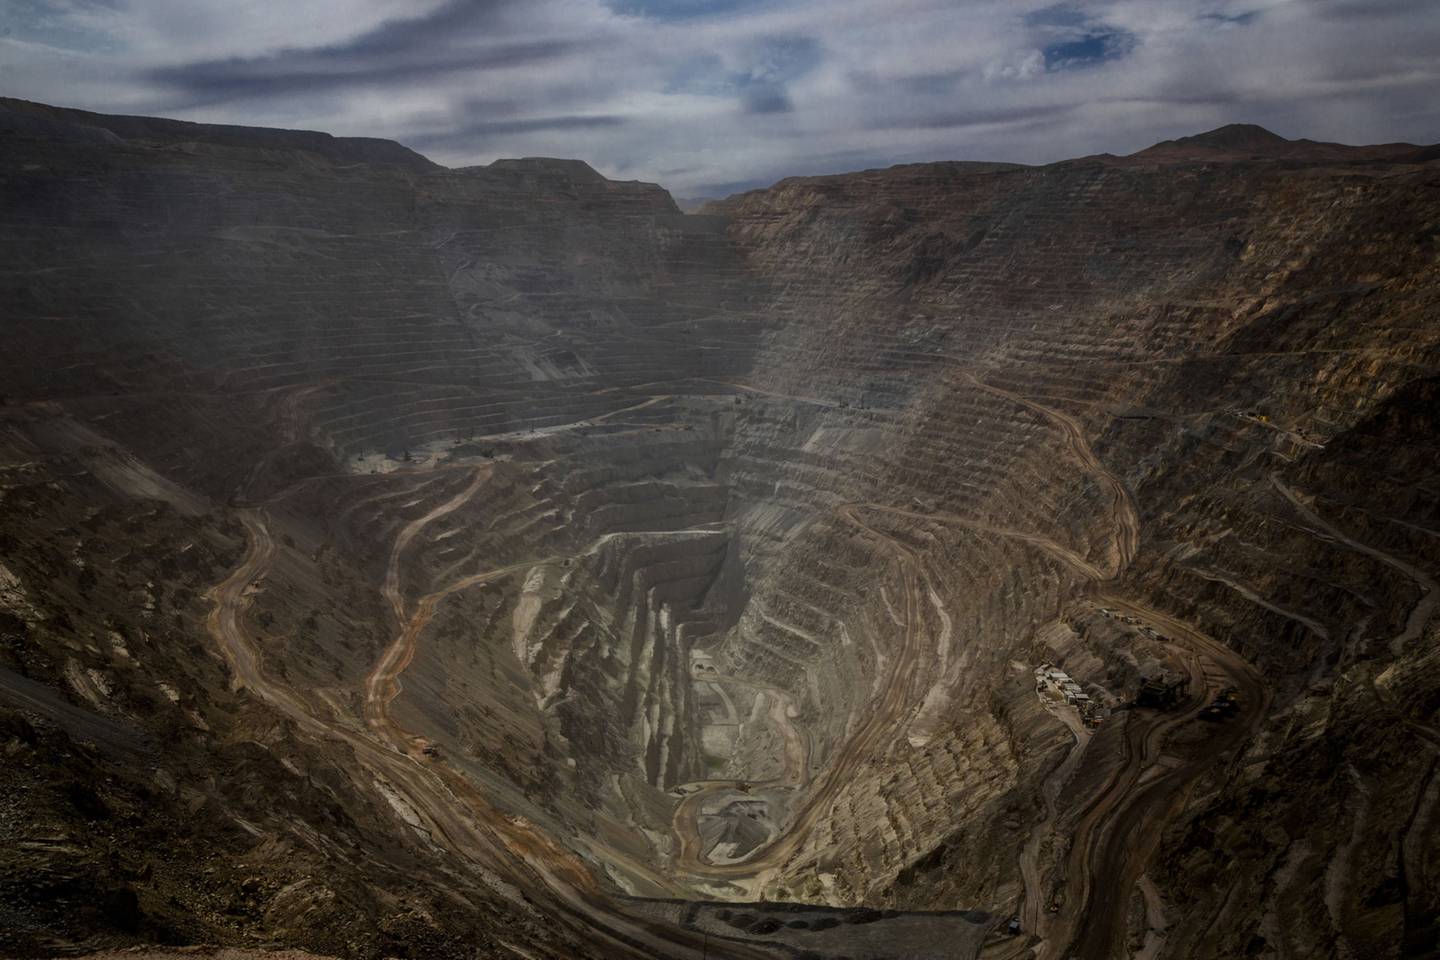 La mina de cobre a cielo abierto Chuquicamata